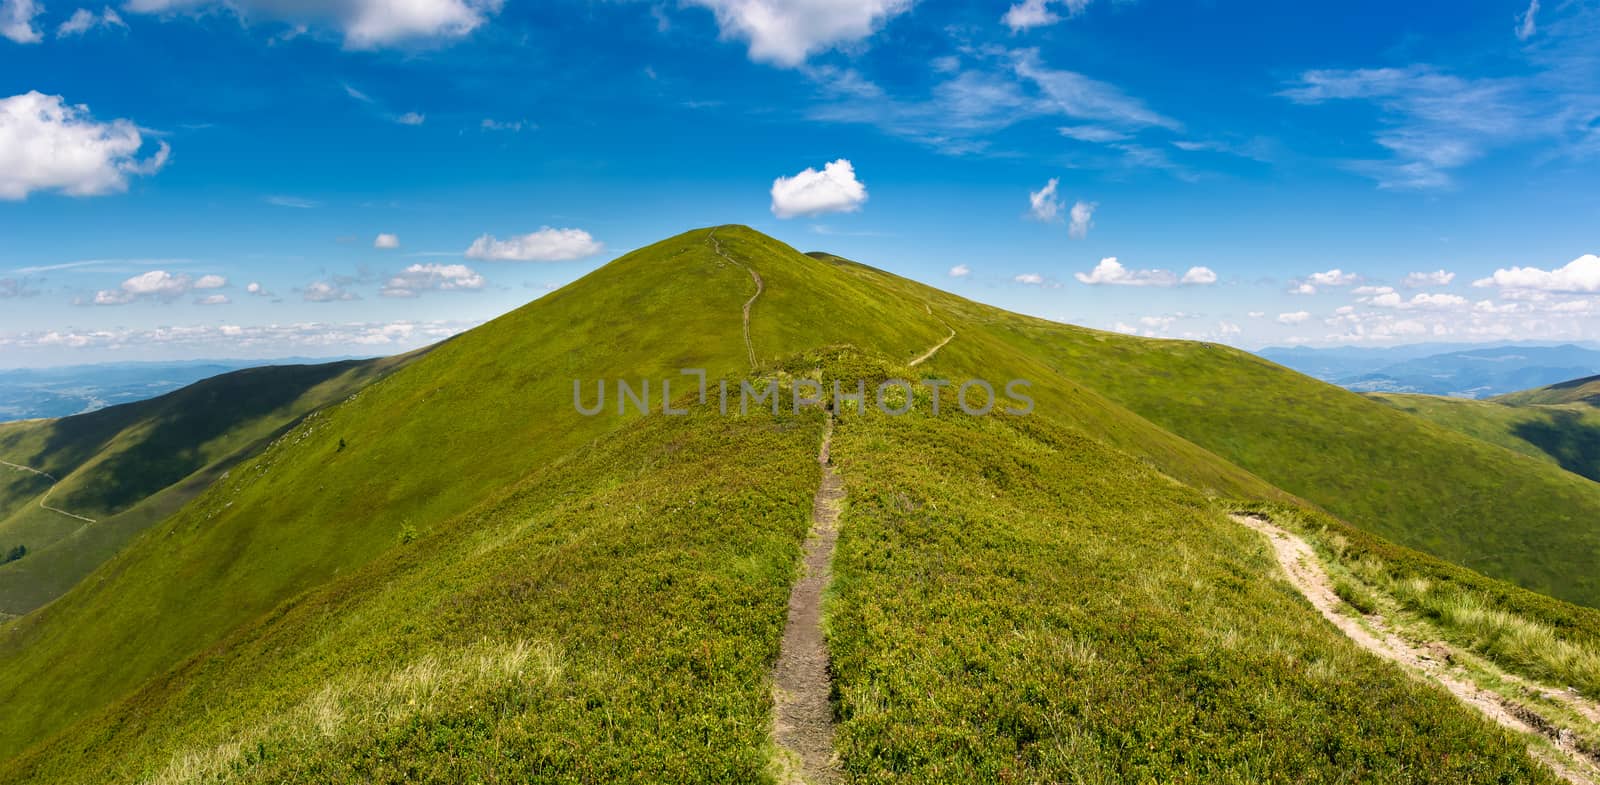 footpath through grassy peak of mountain ridge by Pellinni